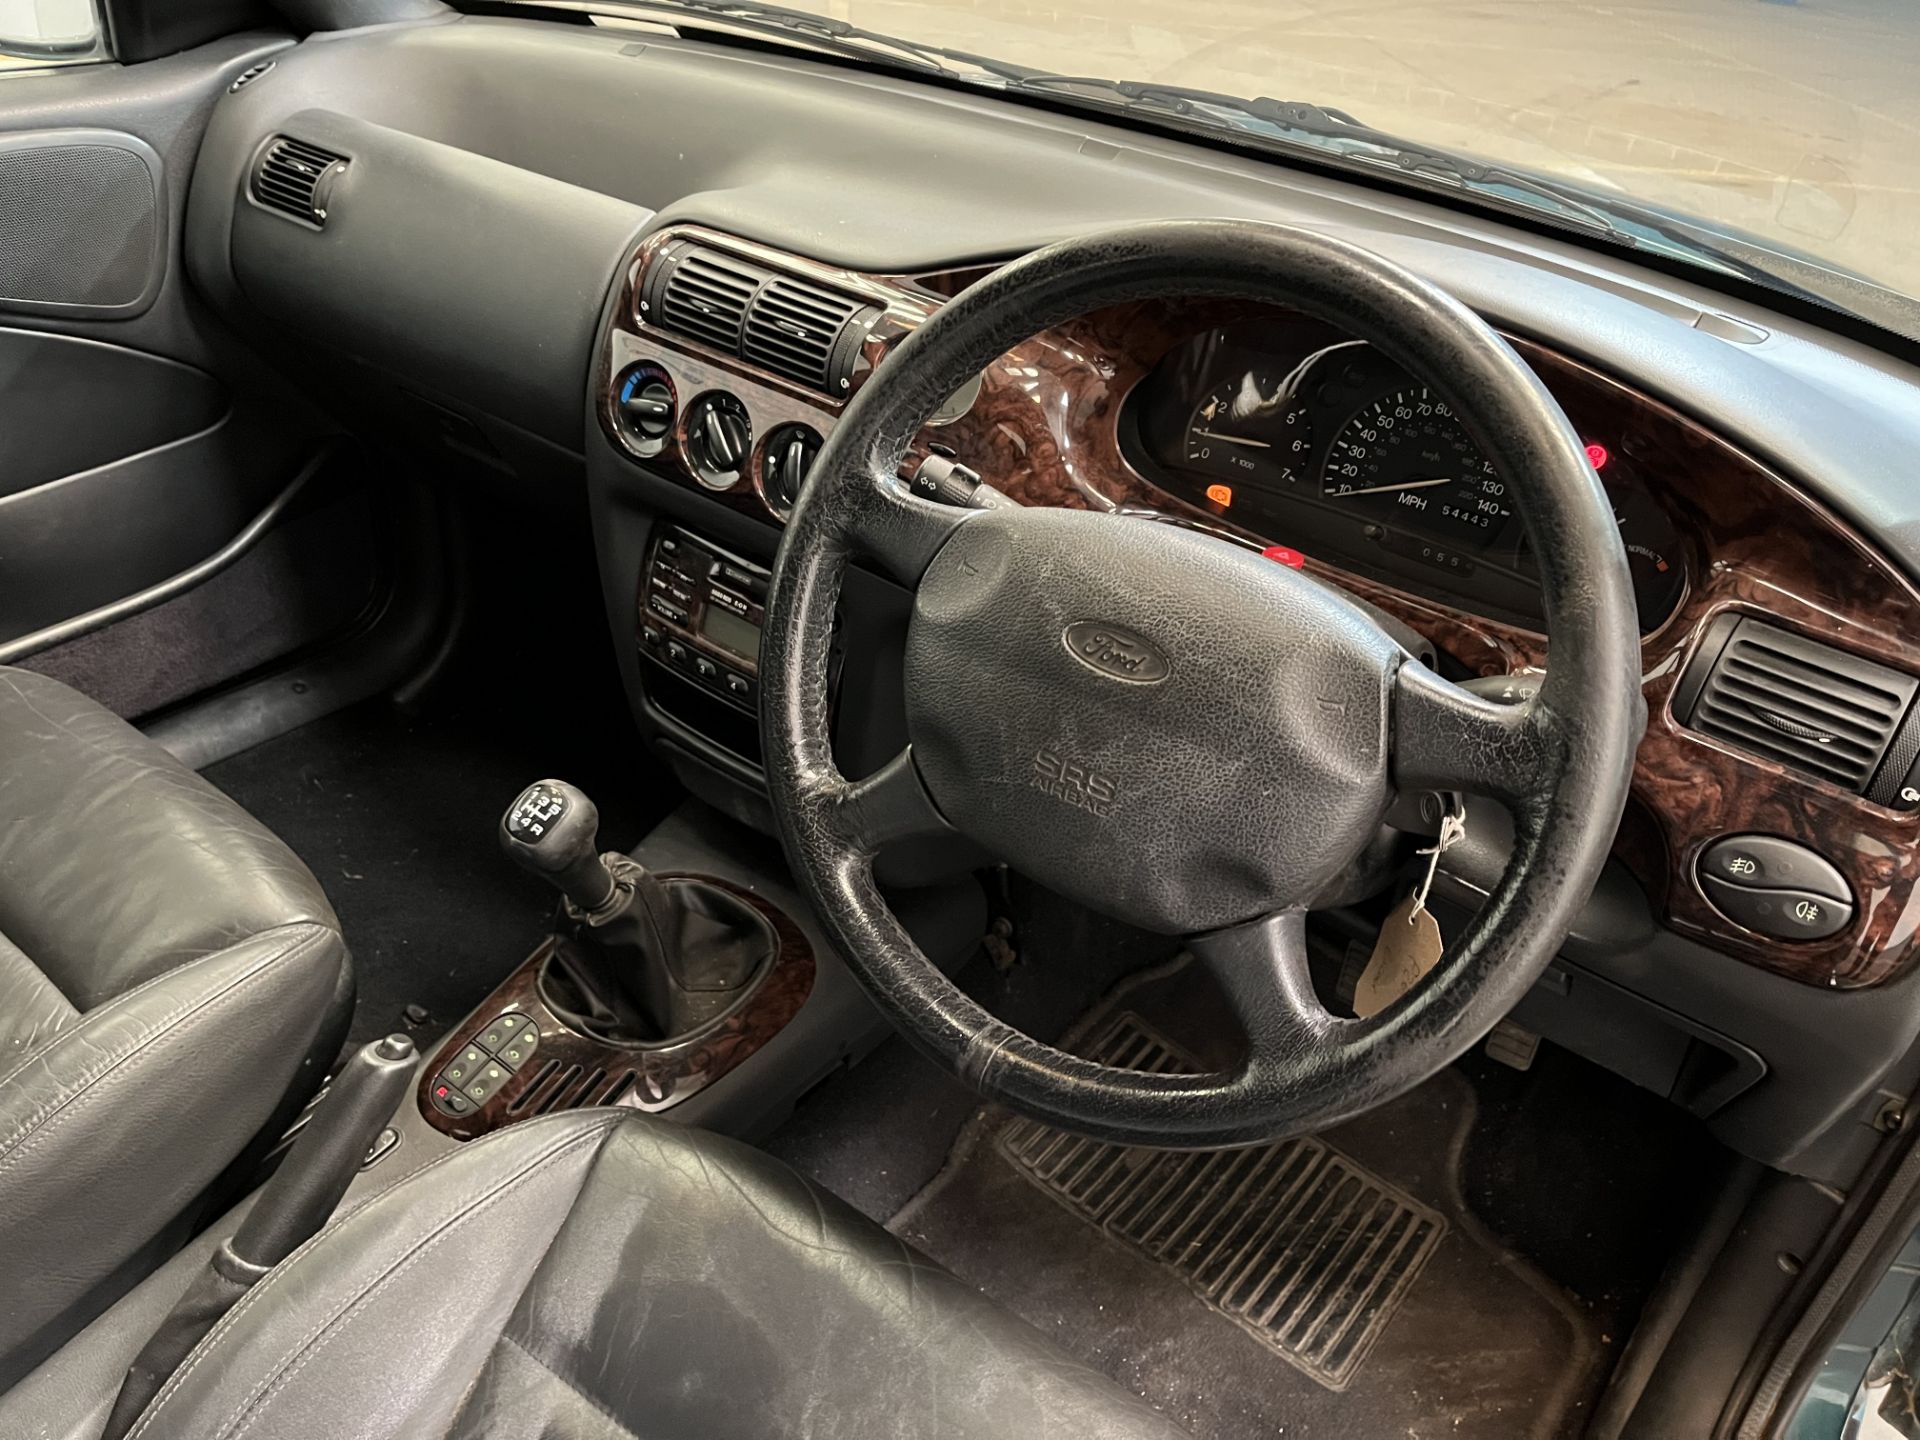 1997 Ford Escort Ghia Cabriolet - 1796cc - Image 9 of 19